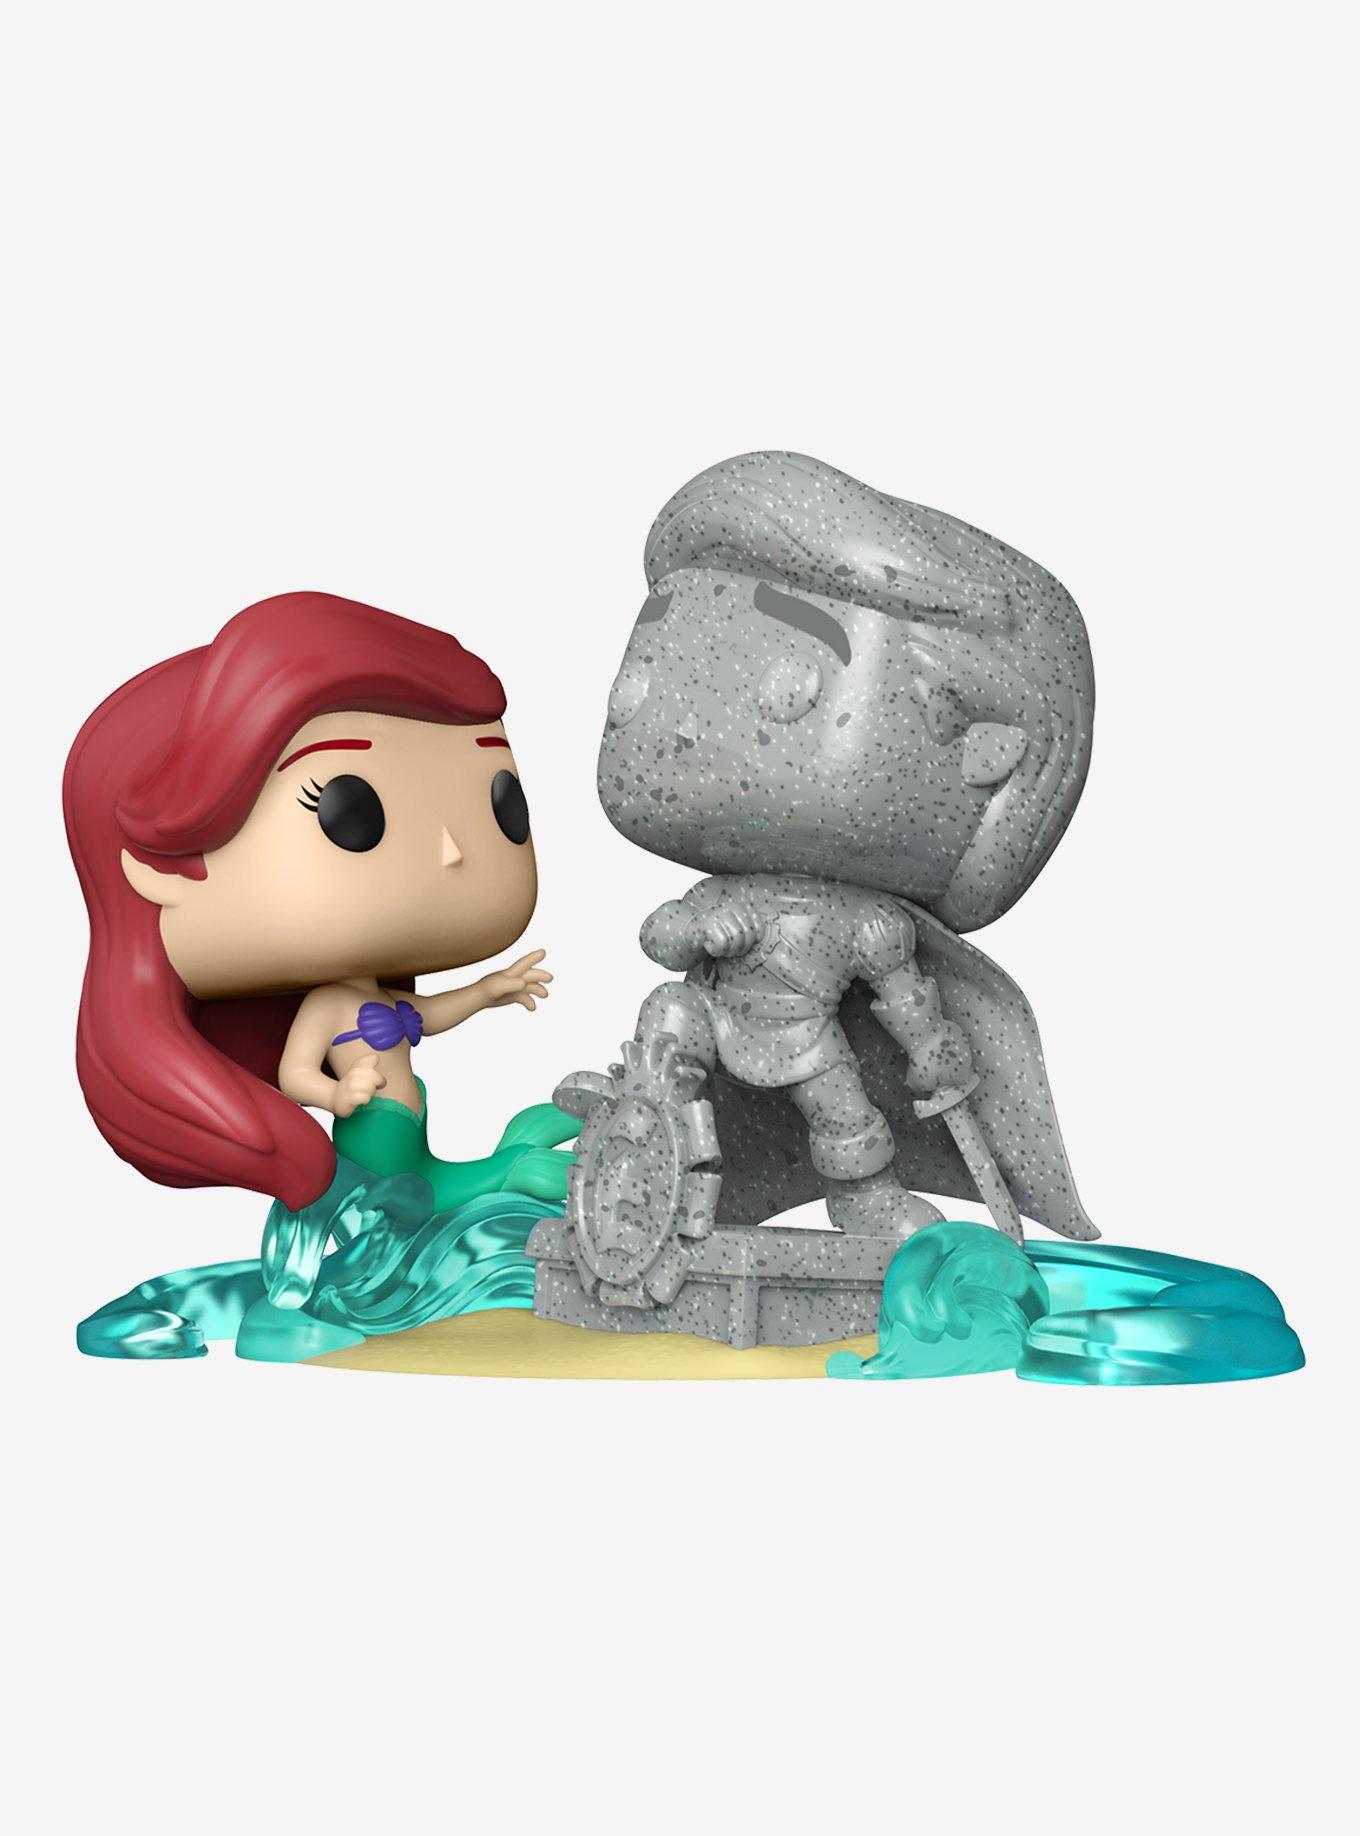 Funko Pop! Moment Disney Princess The Little Mermaid Ariel with Eric Statue Vinyl Figure - BoxLunch Exclusive